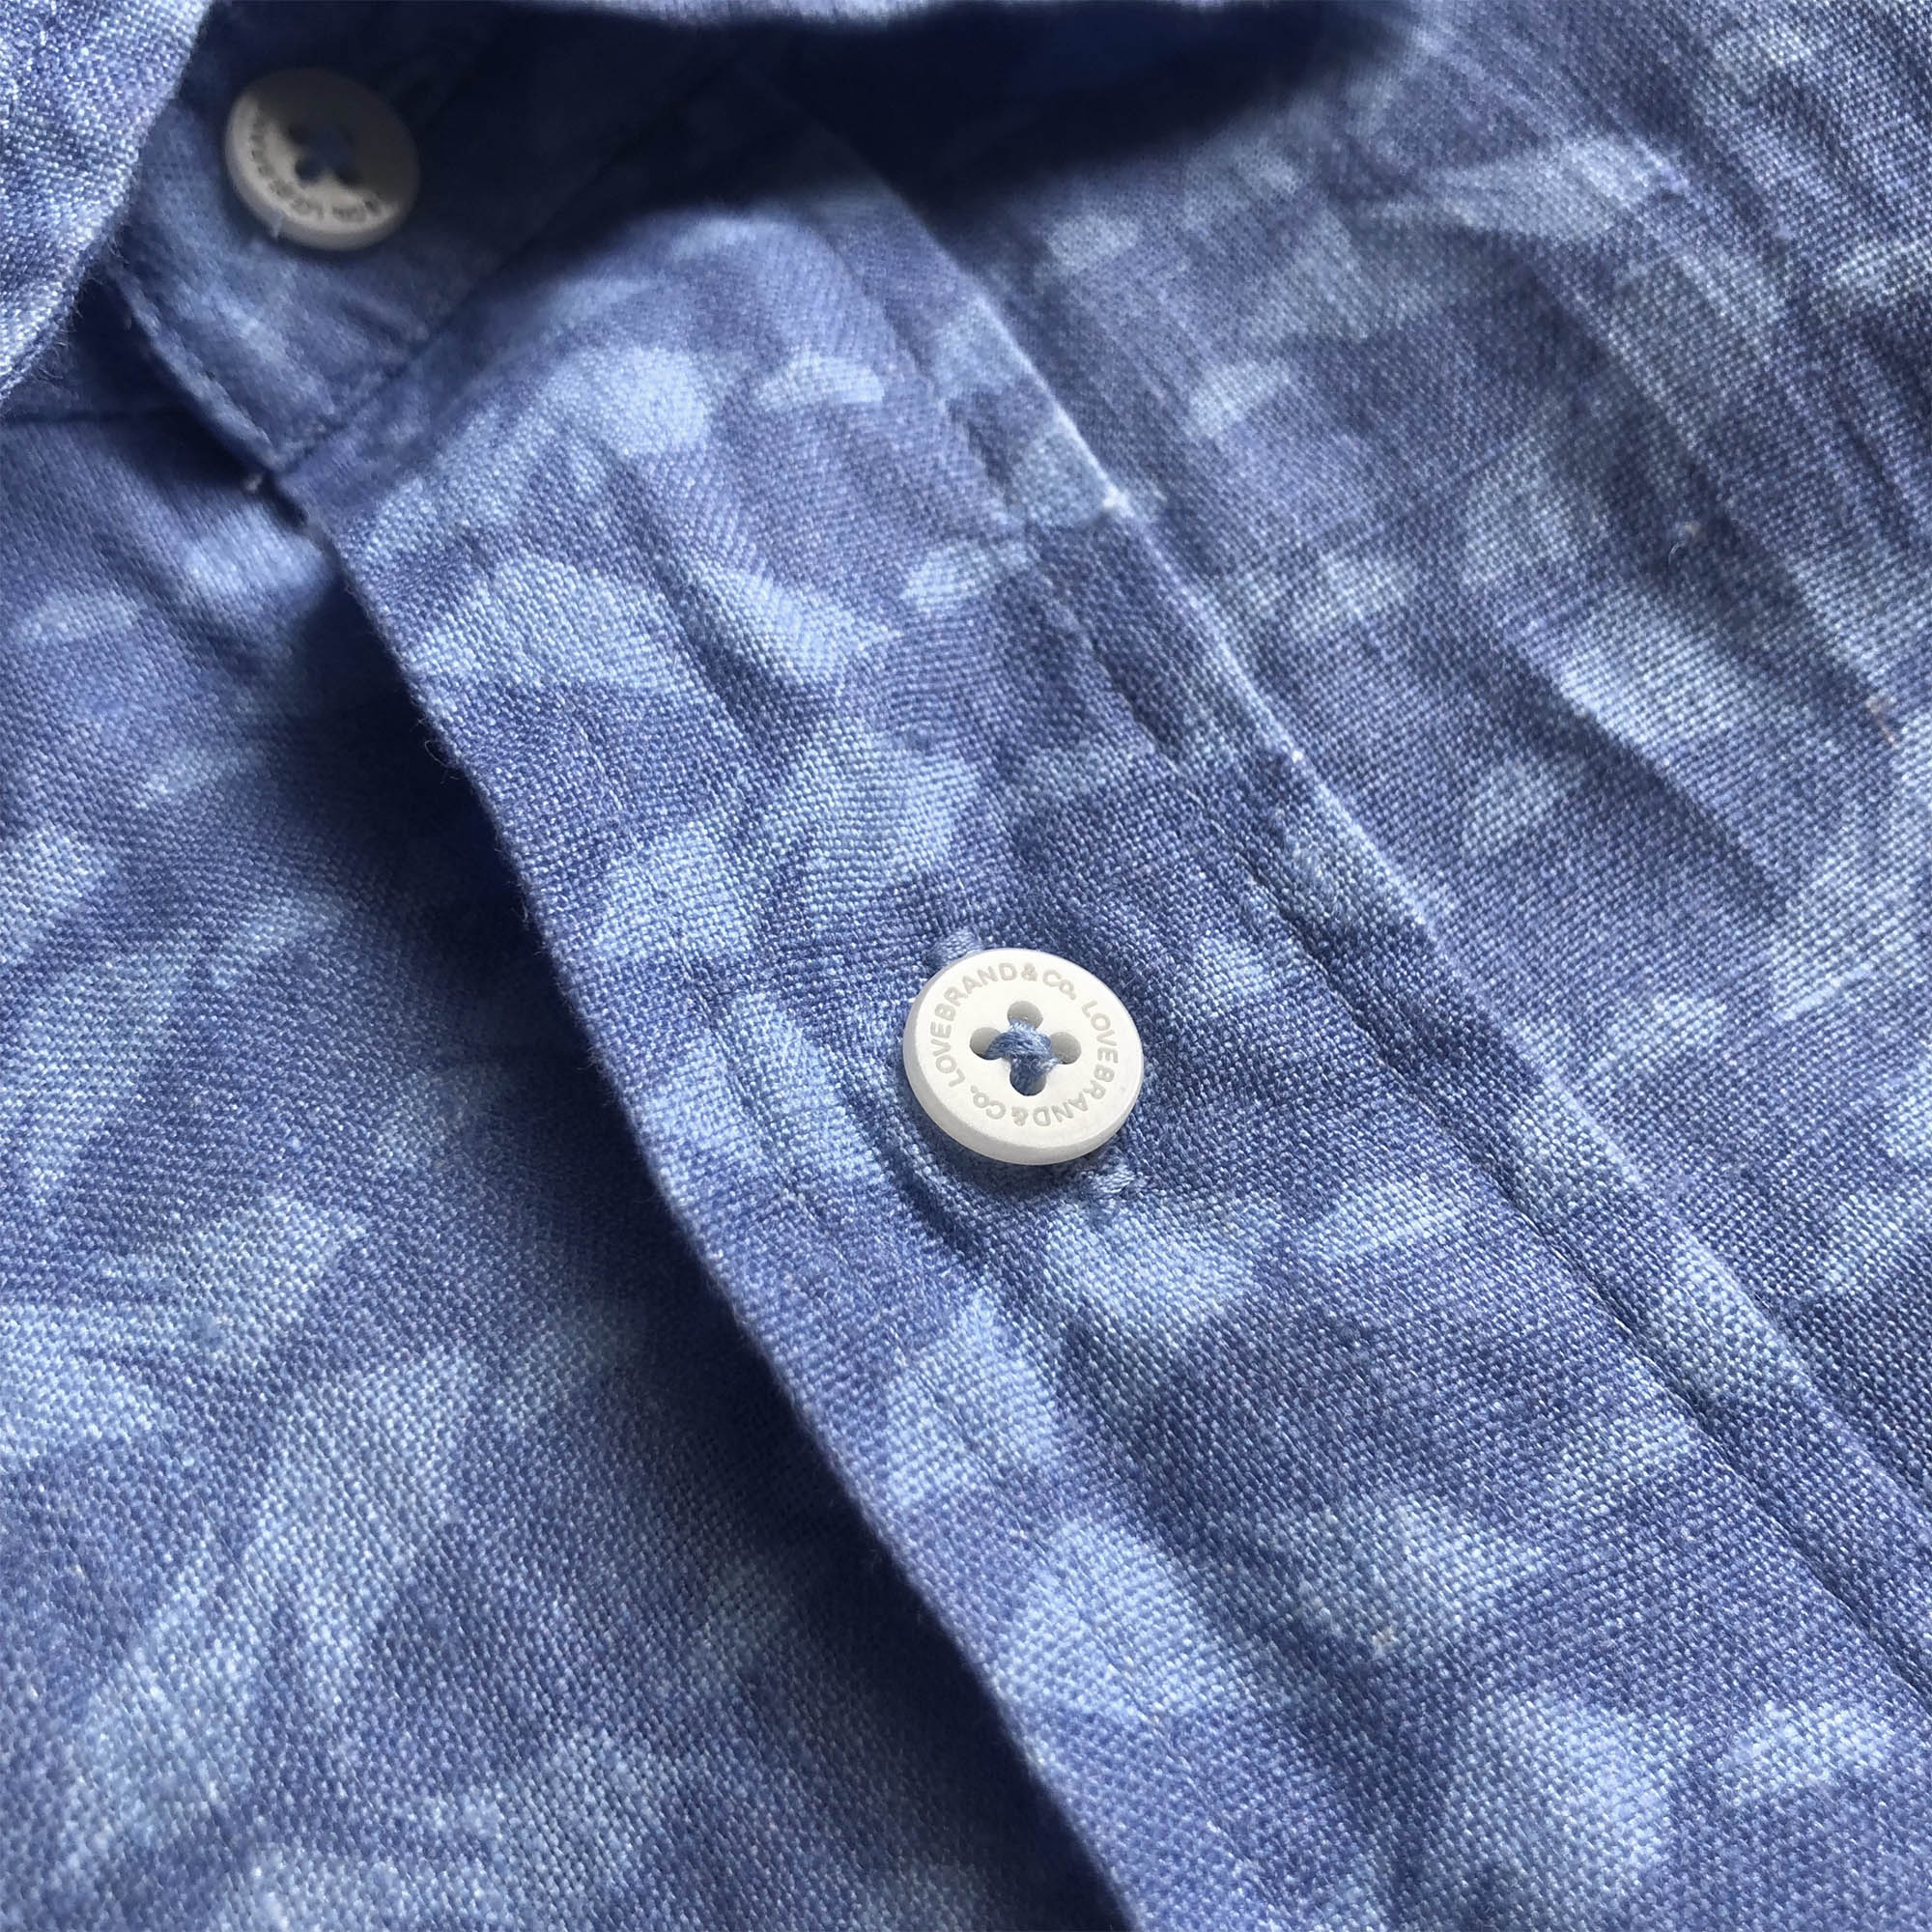 change-your-tuna-printed-abaco-linen-shirt-button